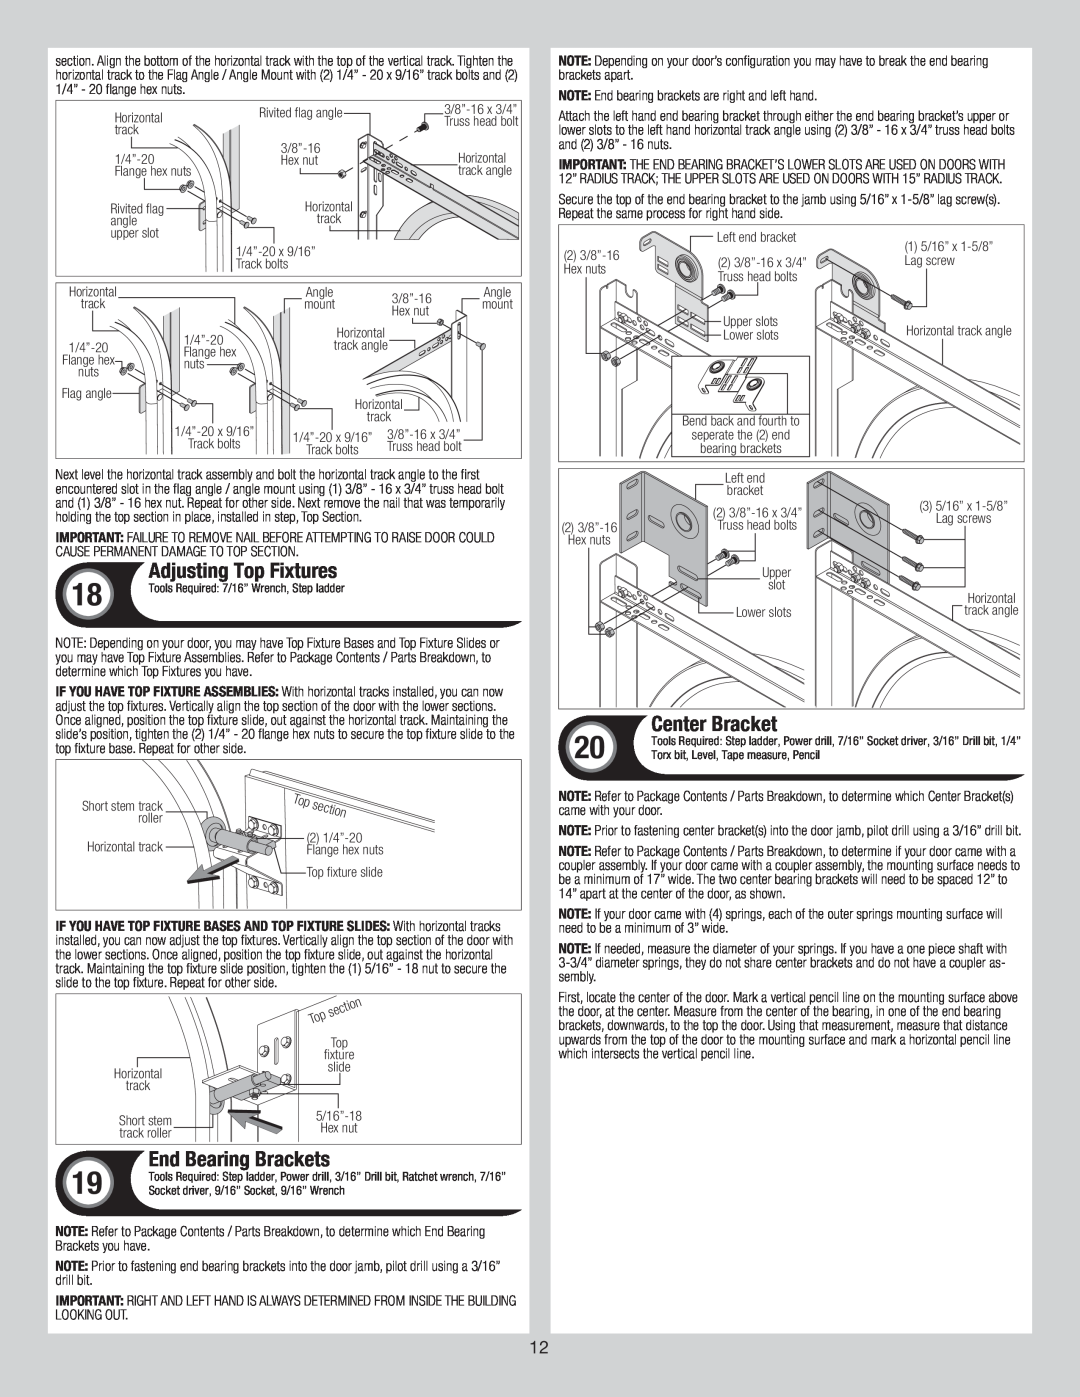 Wayne-Dalton 6600 installation instructions End Bearing Brackets, Center Bracket, Adjusting Top Fixtures 